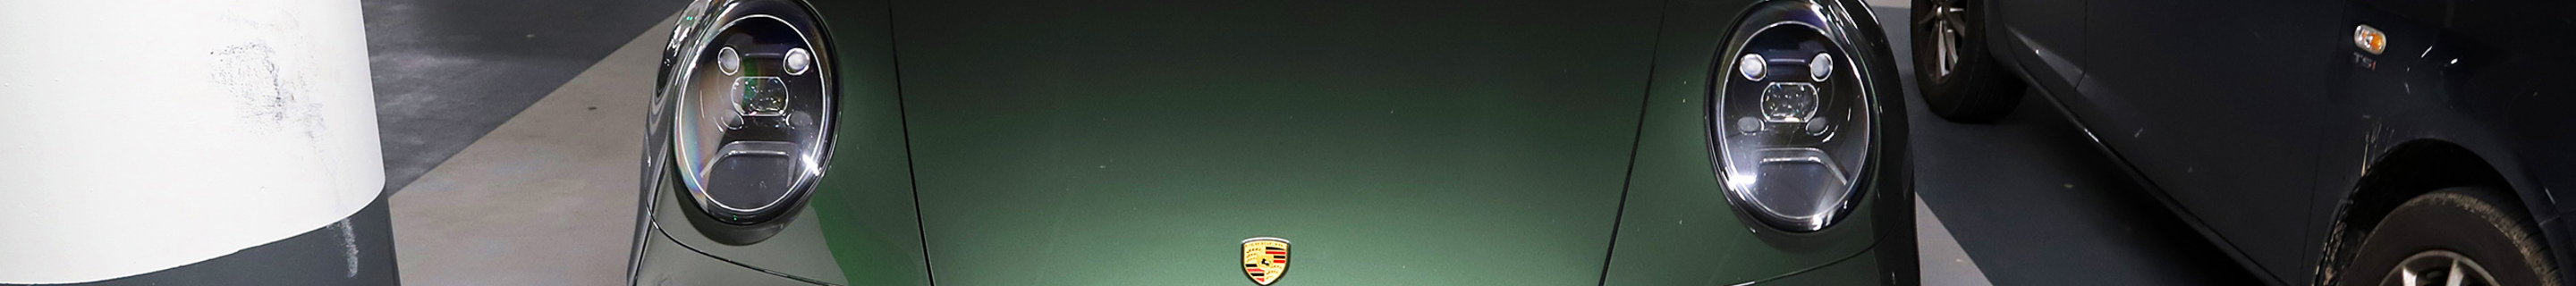 Porsche 992 Carrera 4S Cabriolet